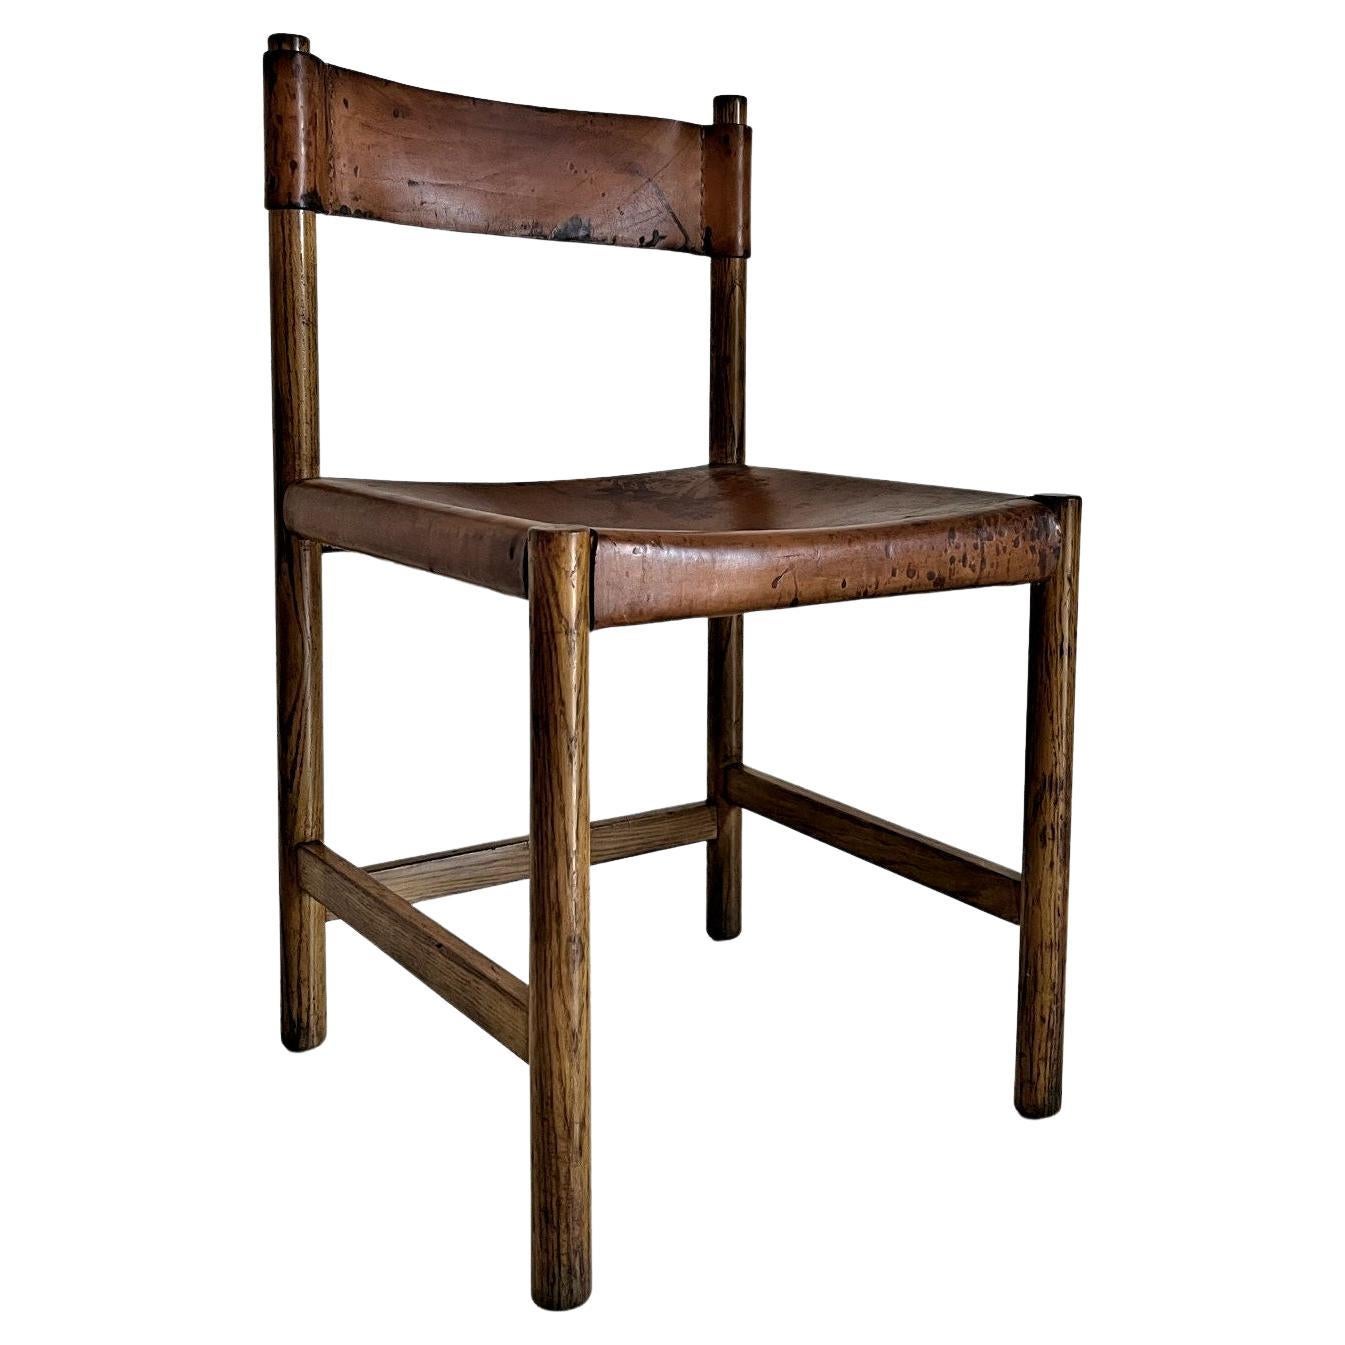 Jordi Villanova Leather and Wood Chair For Sale